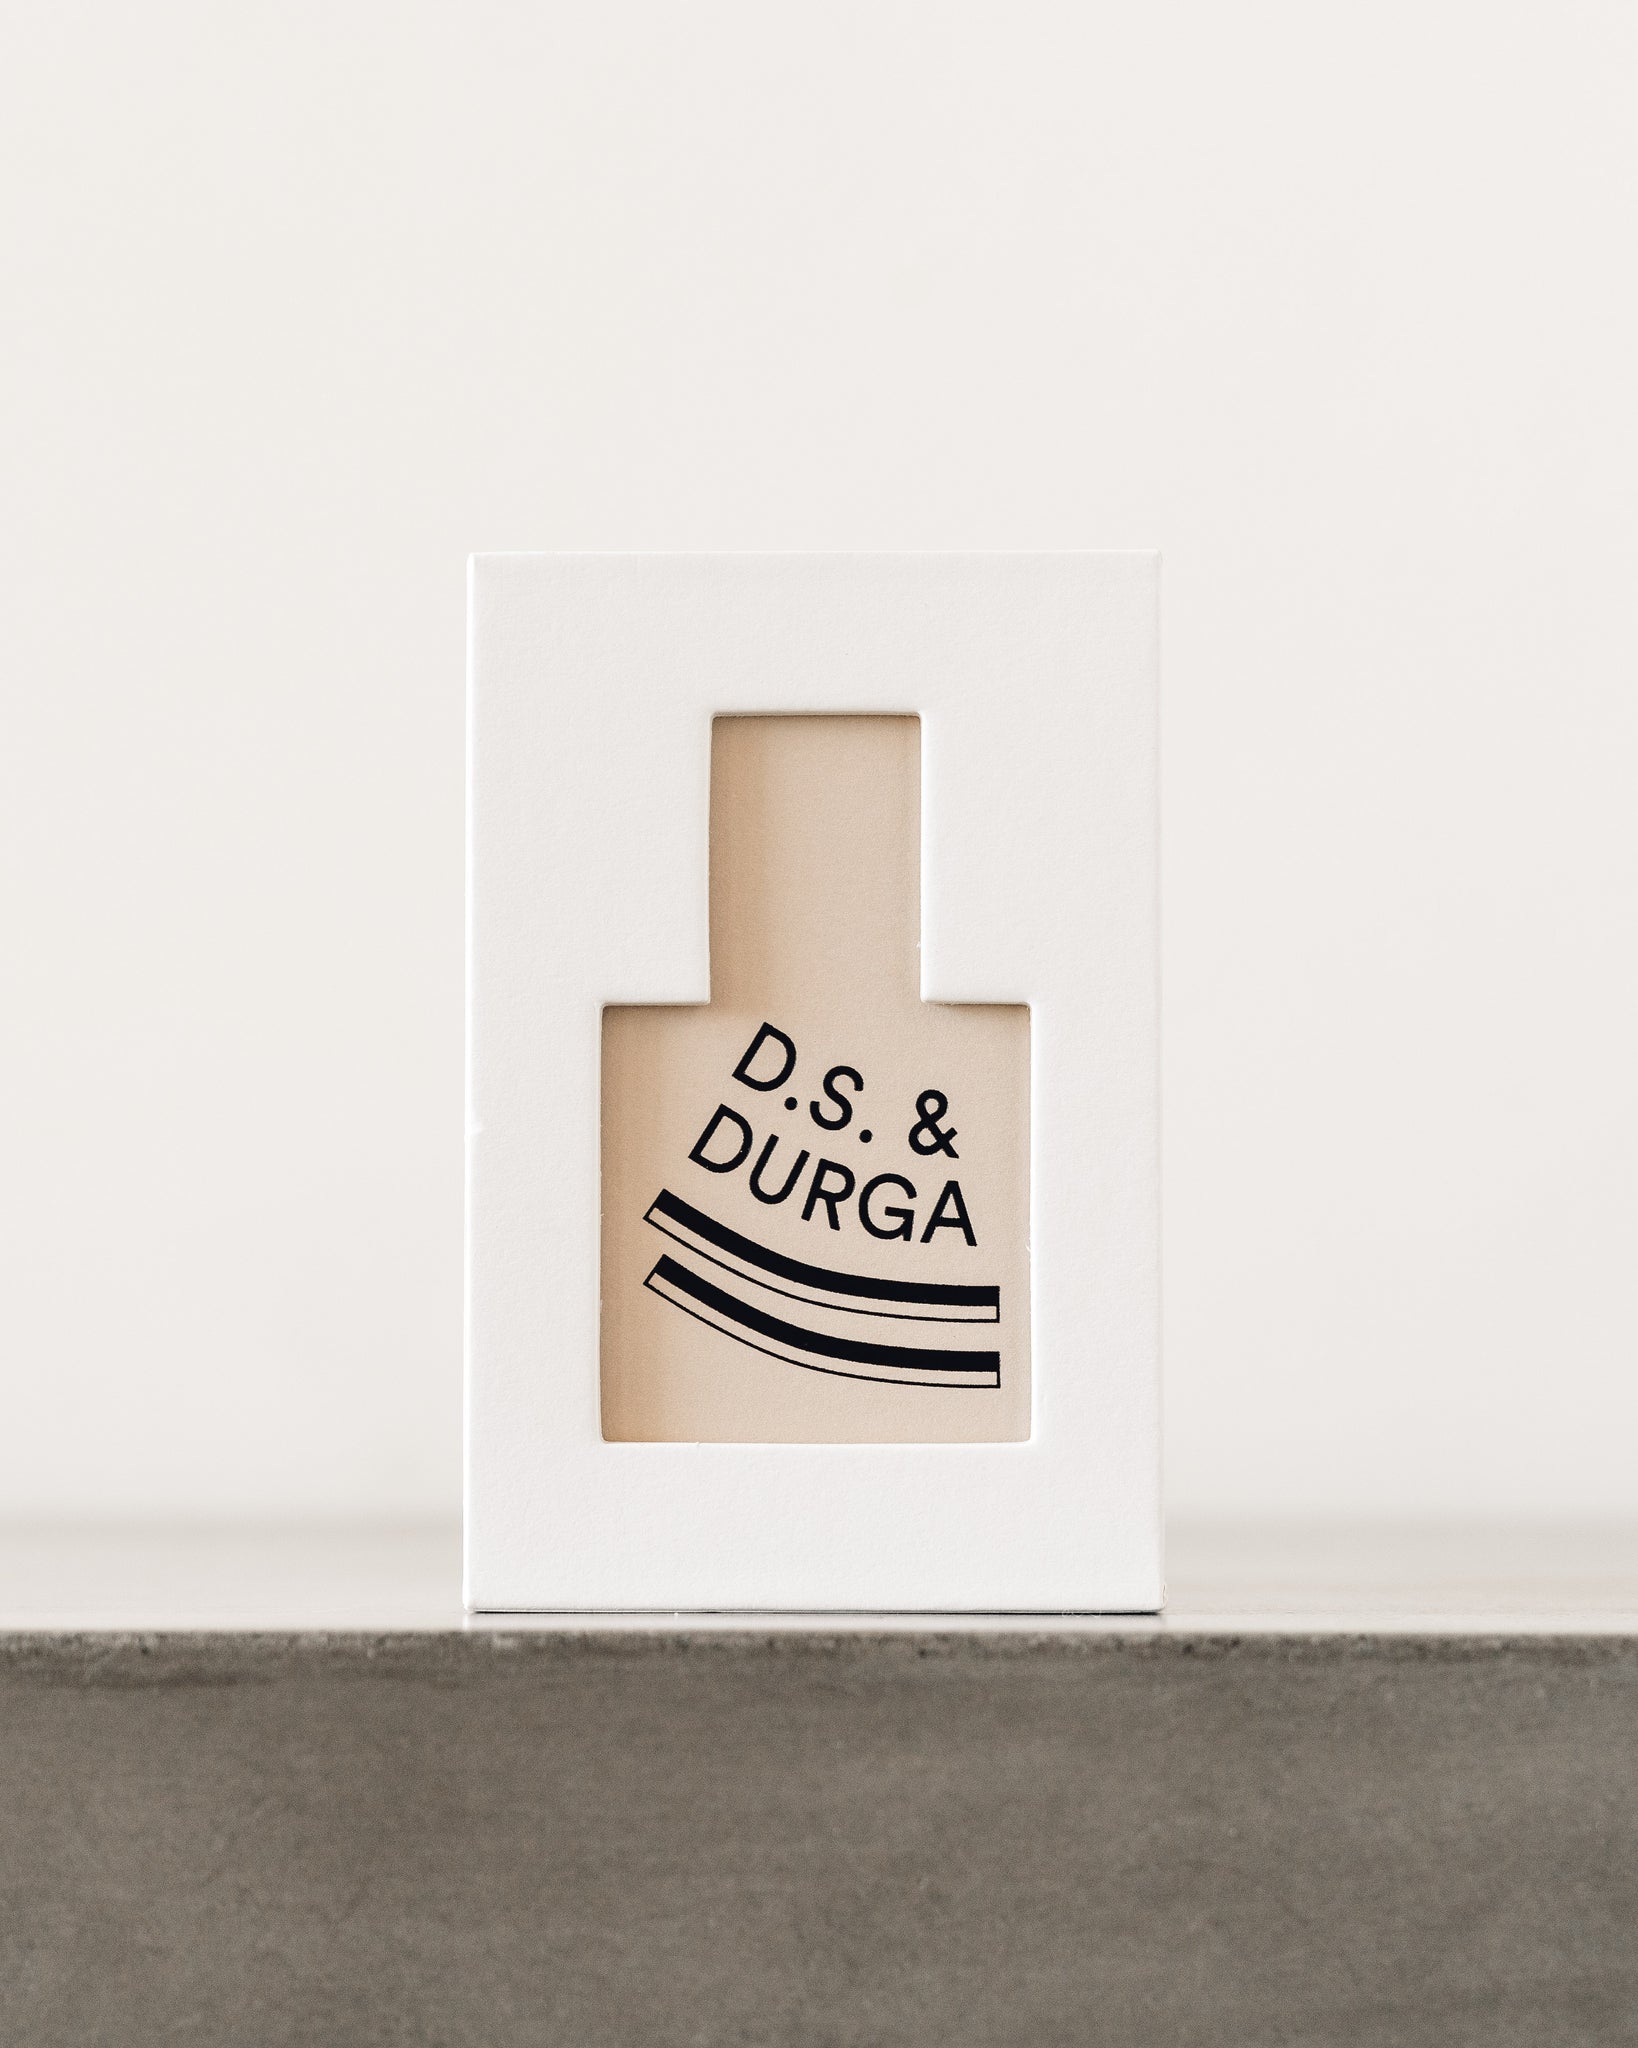 D.S. & Durga Perfume, Burning Barbershop